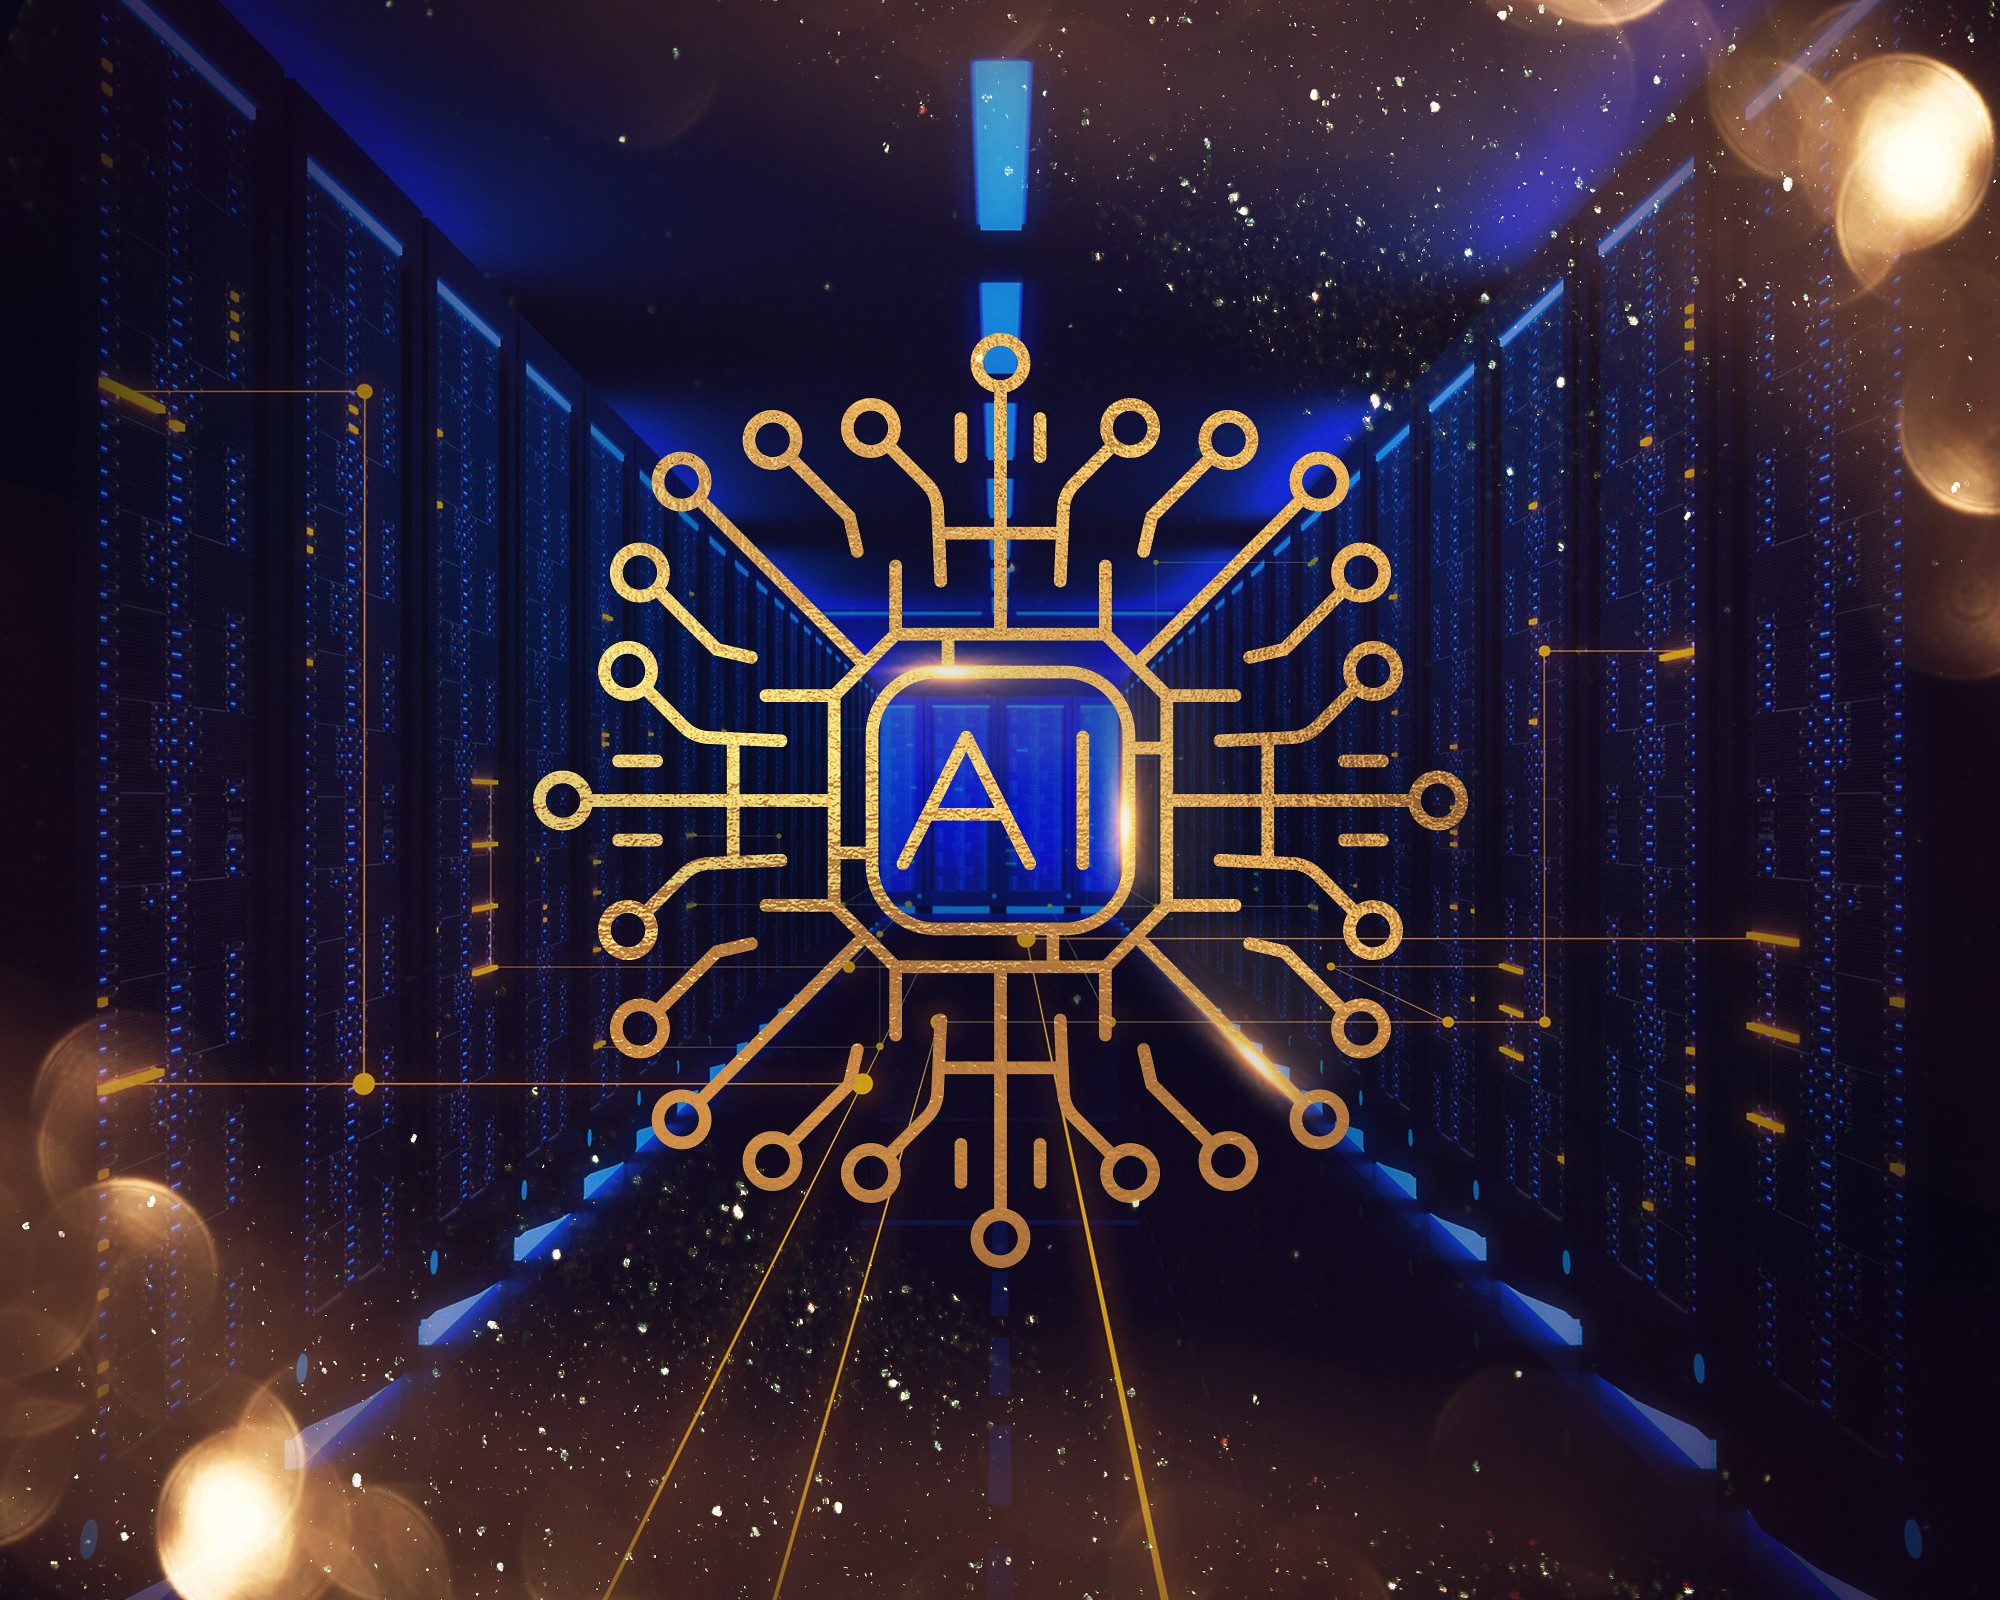 SUS Artificial Intelligence (AI) Faculty Survey